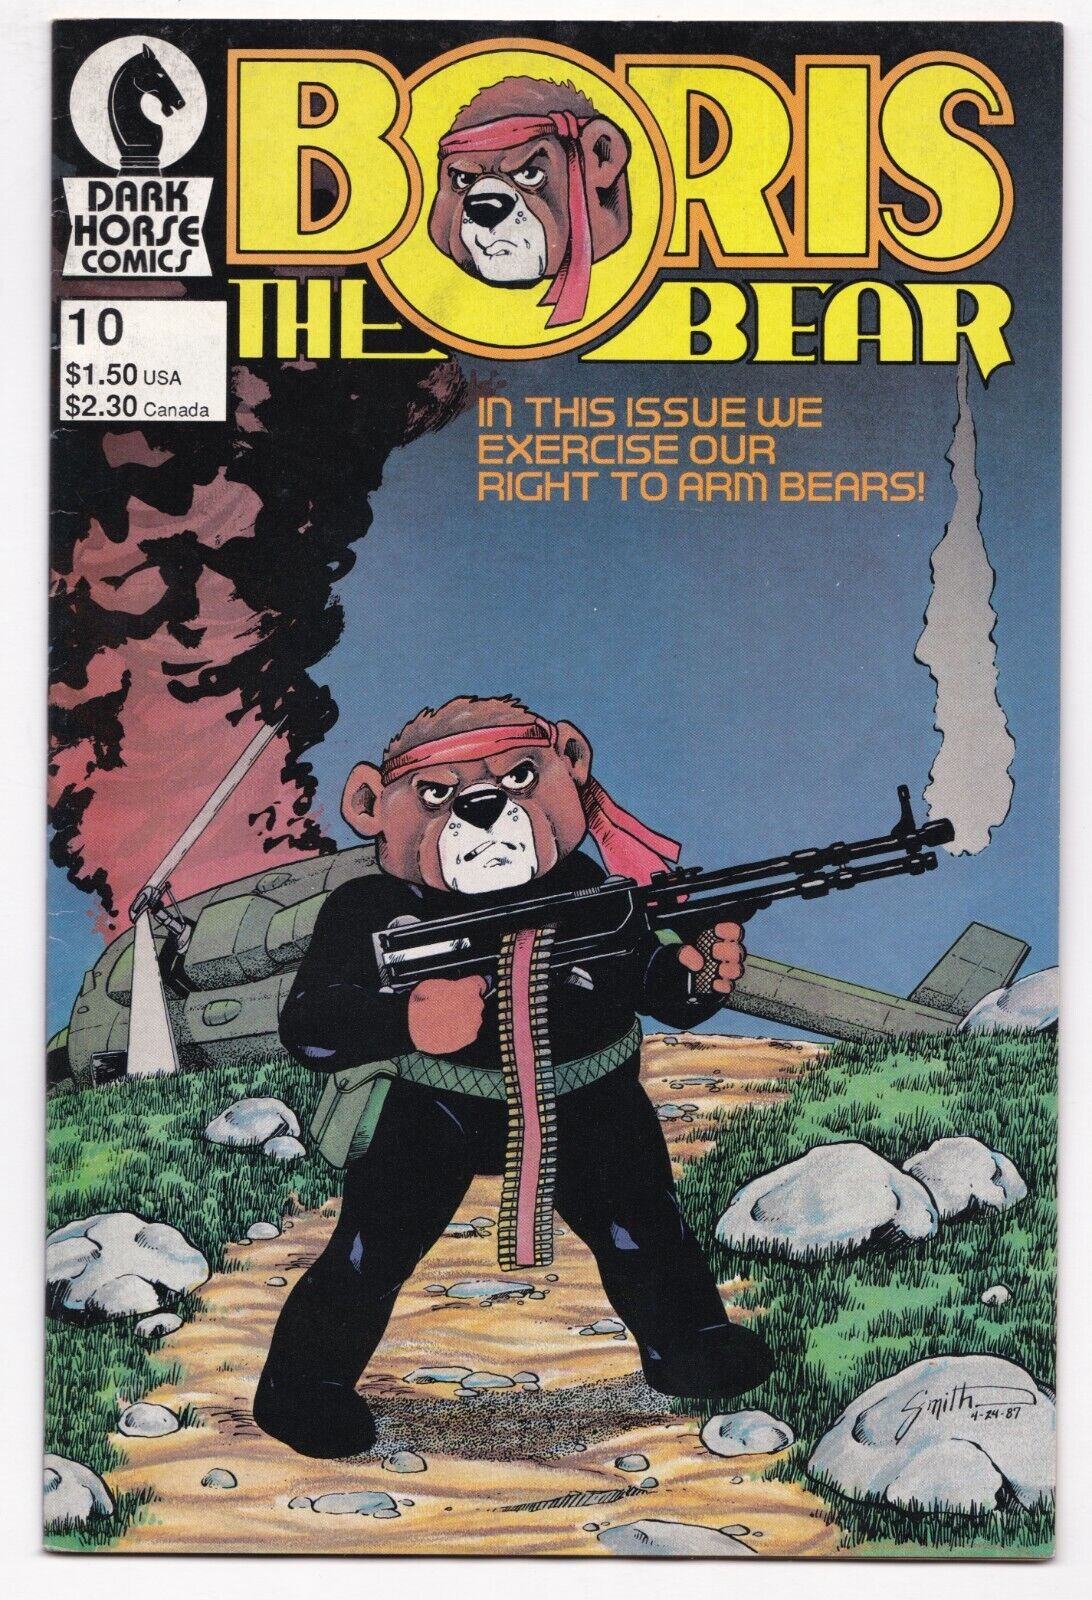 Boris The Bear #5 #10 (1986 Dark Horse) Some cover soiling tanning Без бренда - фотография #2